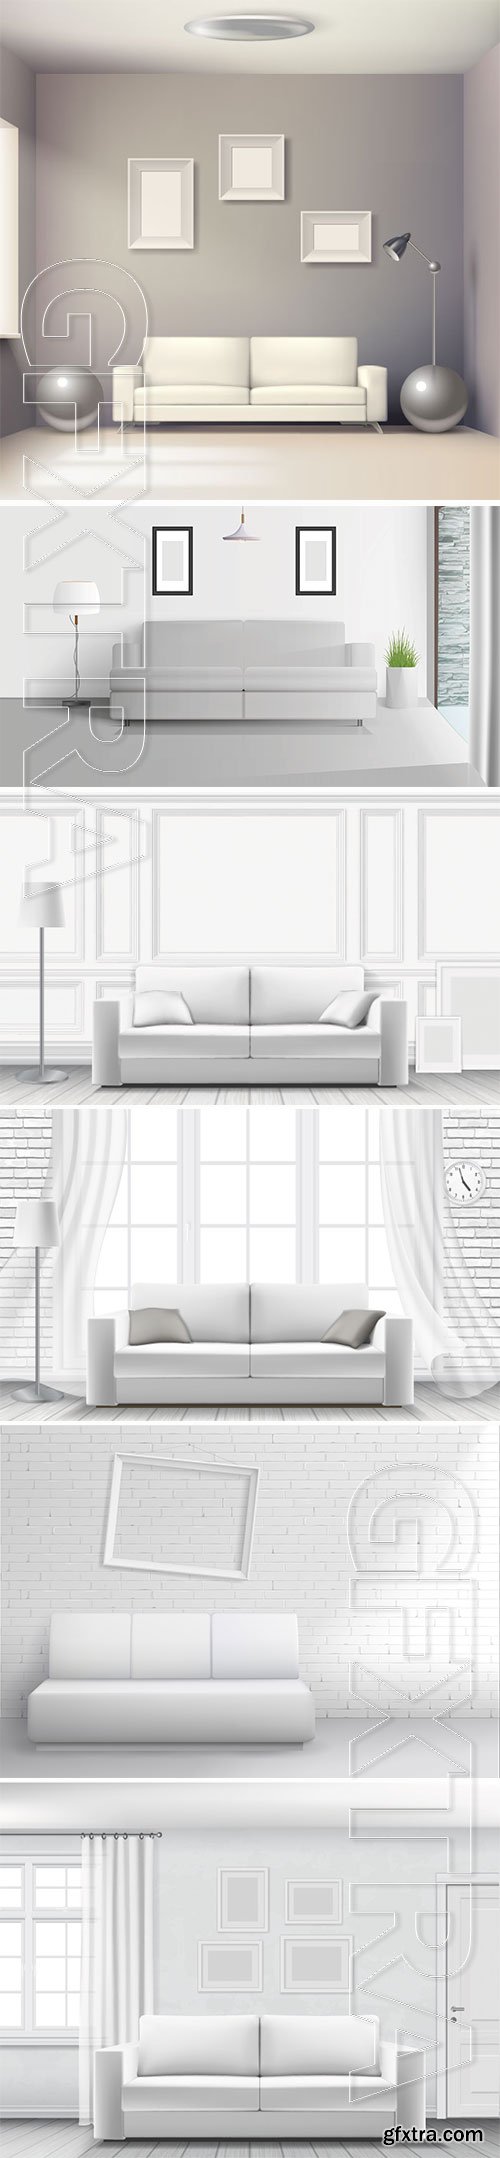 Realistic home interior vector template # 4